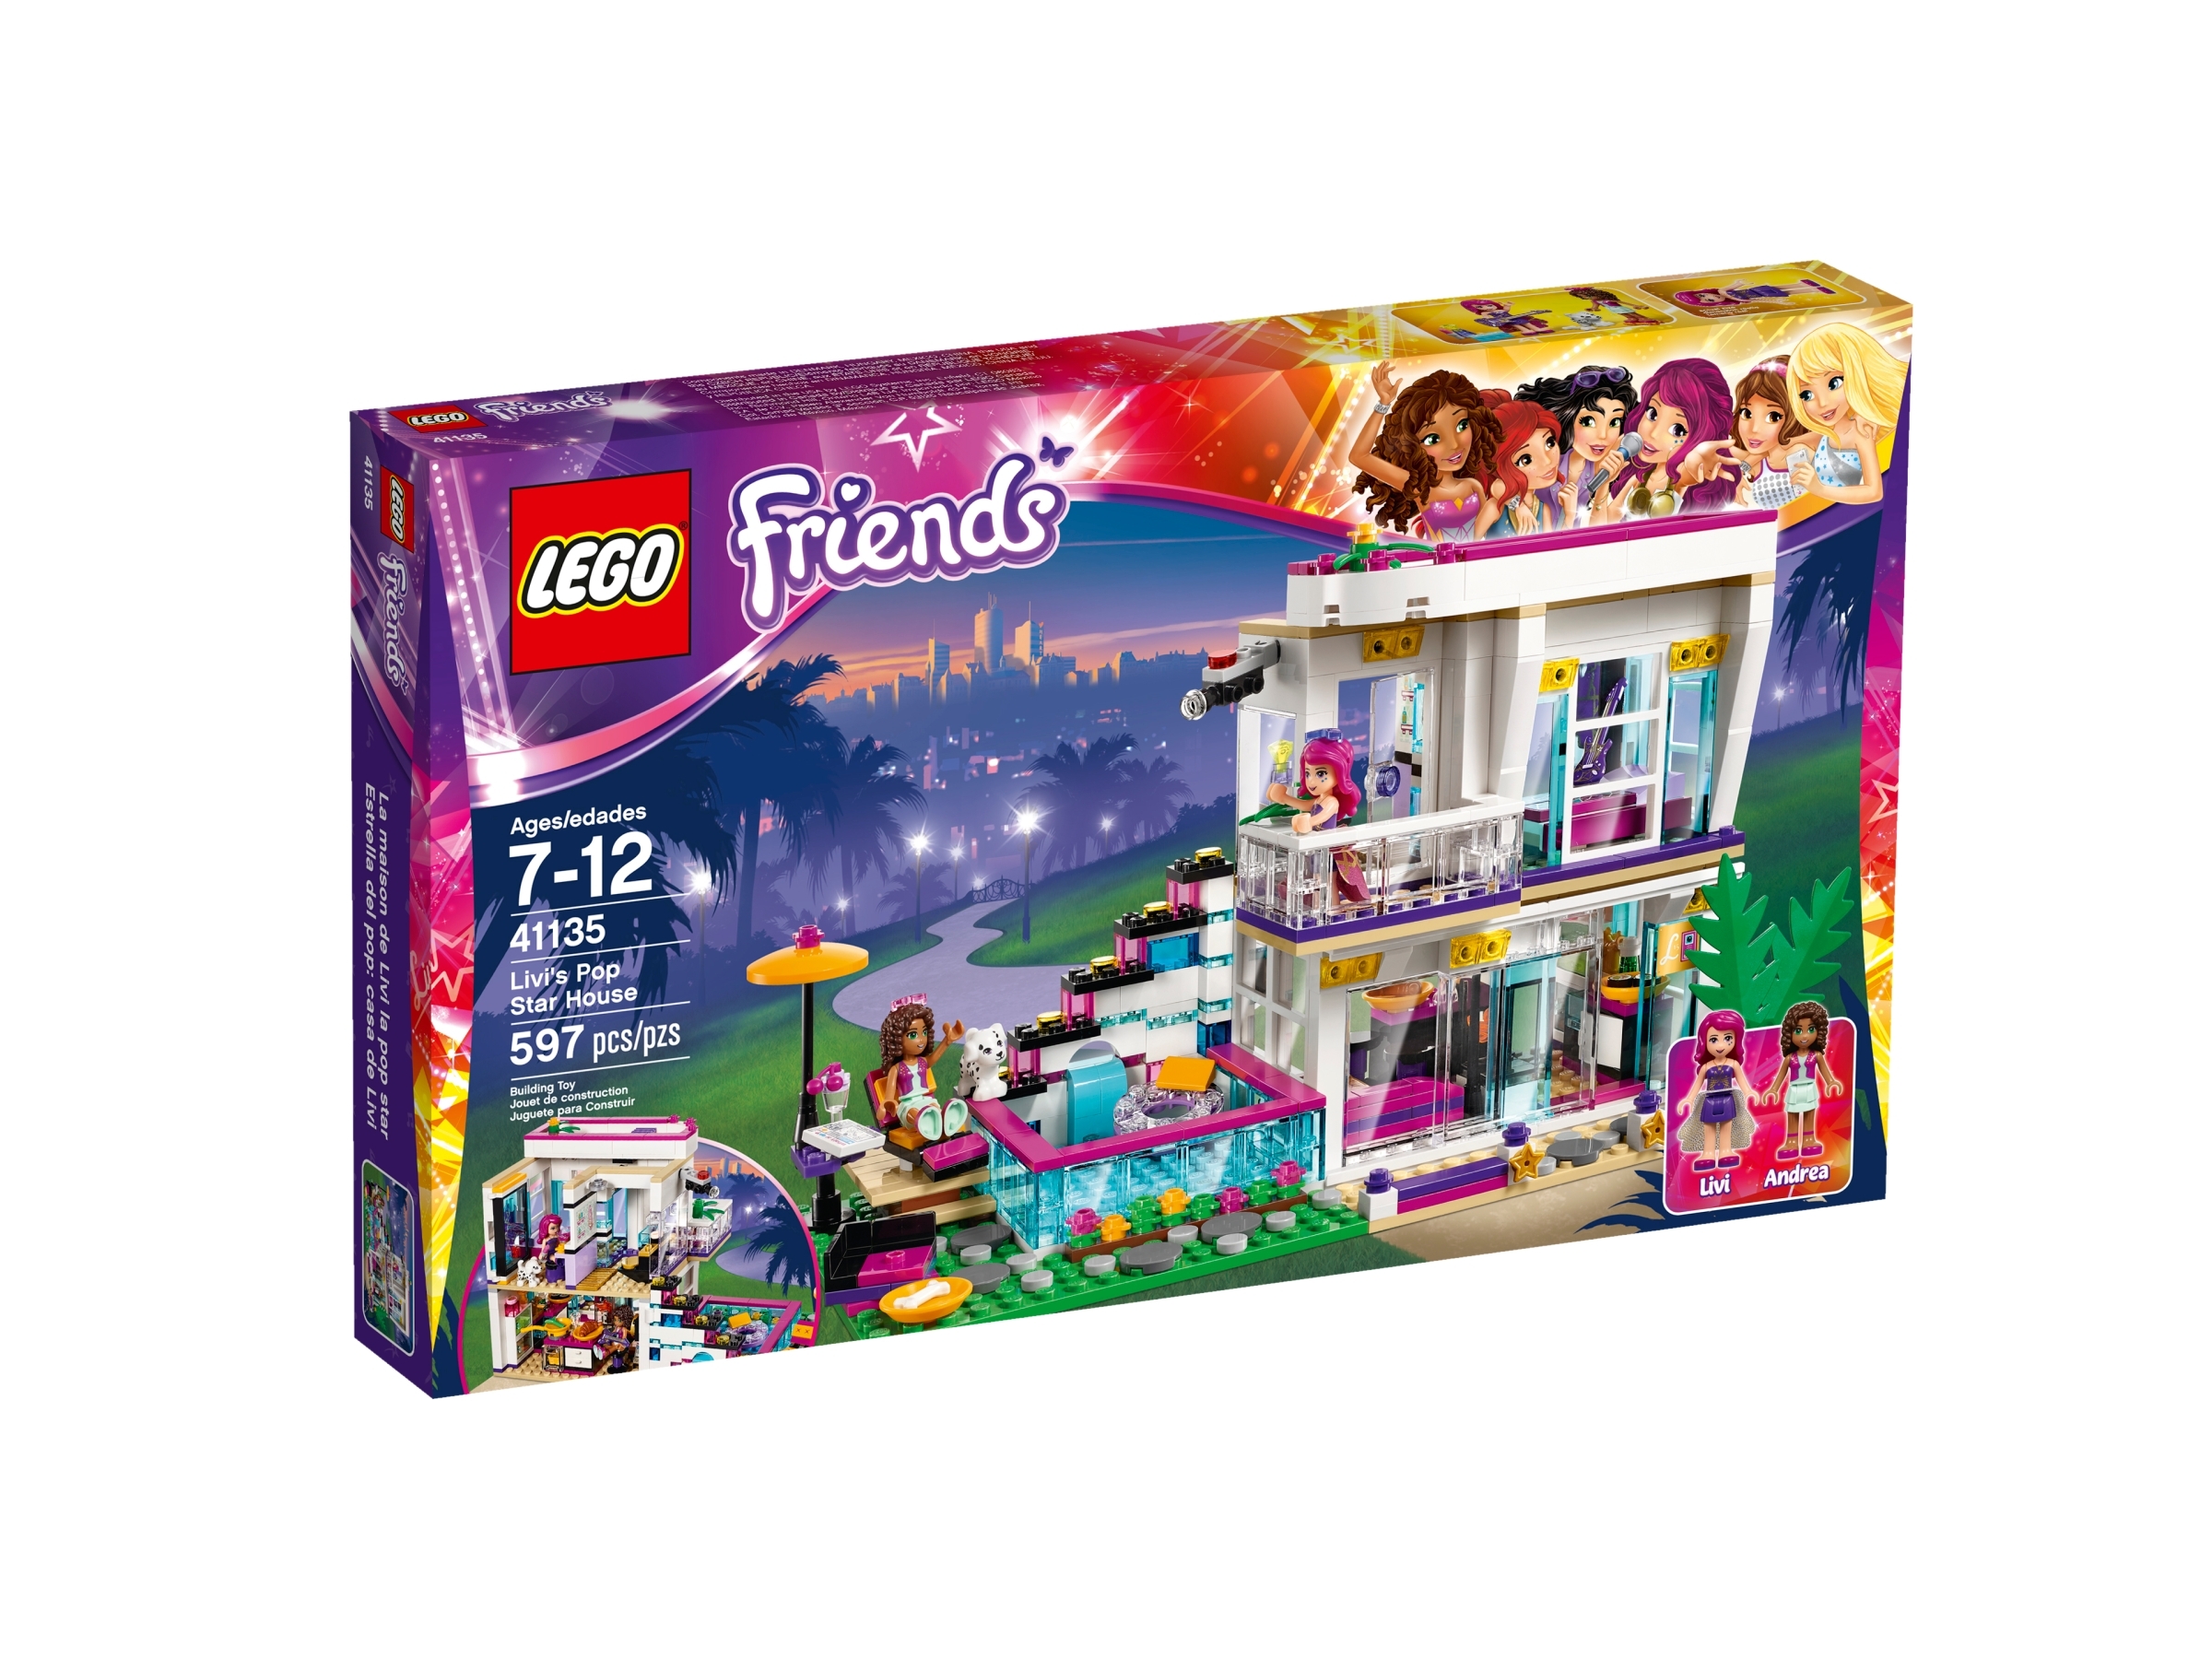 LEGO Friends Set 41135 Livi’s Pop Star House Retired 100% Complete w/ Manual 